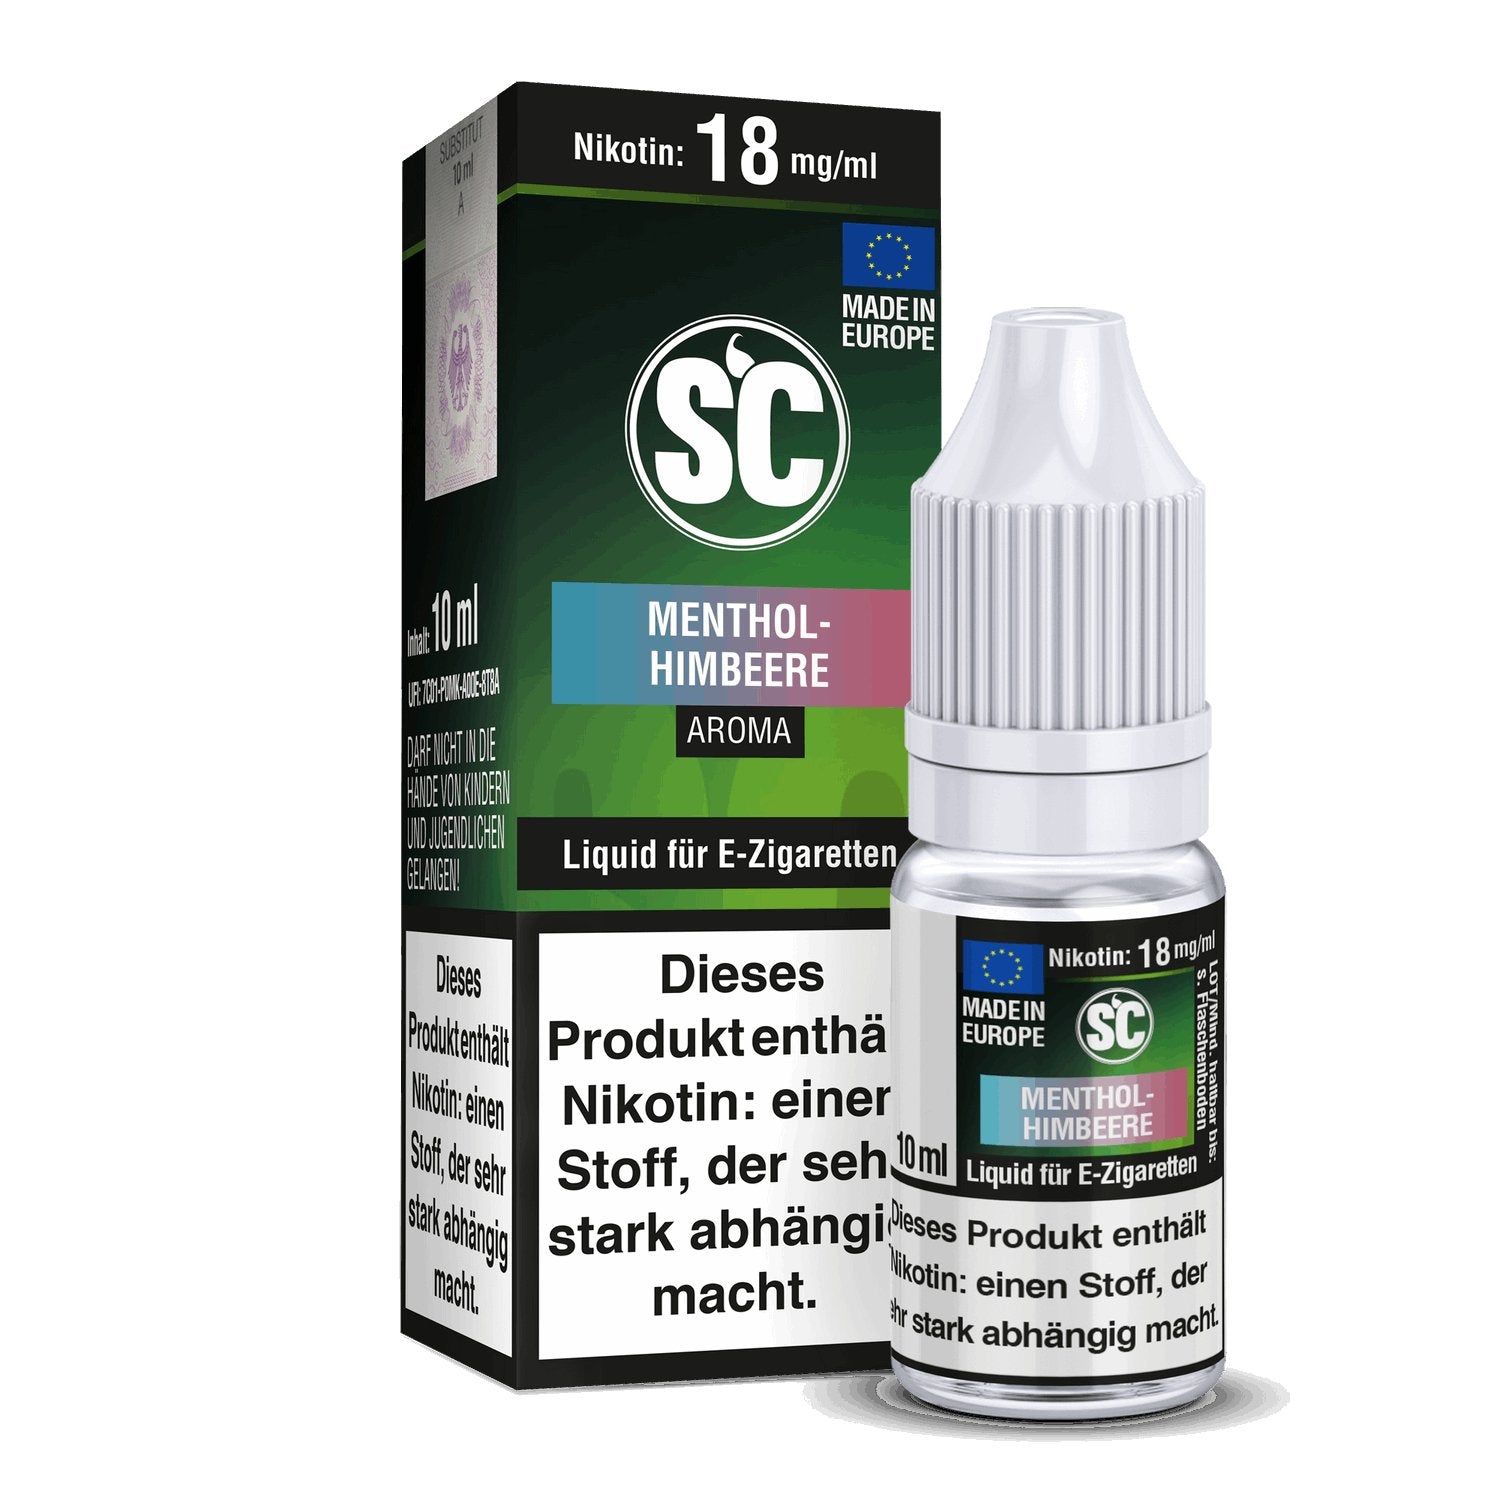 SC - Menthol-Himbeere - 10ml Fertigliquid (Nikotinfrei/Nikotin) - 1er Packung 3 mg/ml - Vapes4you